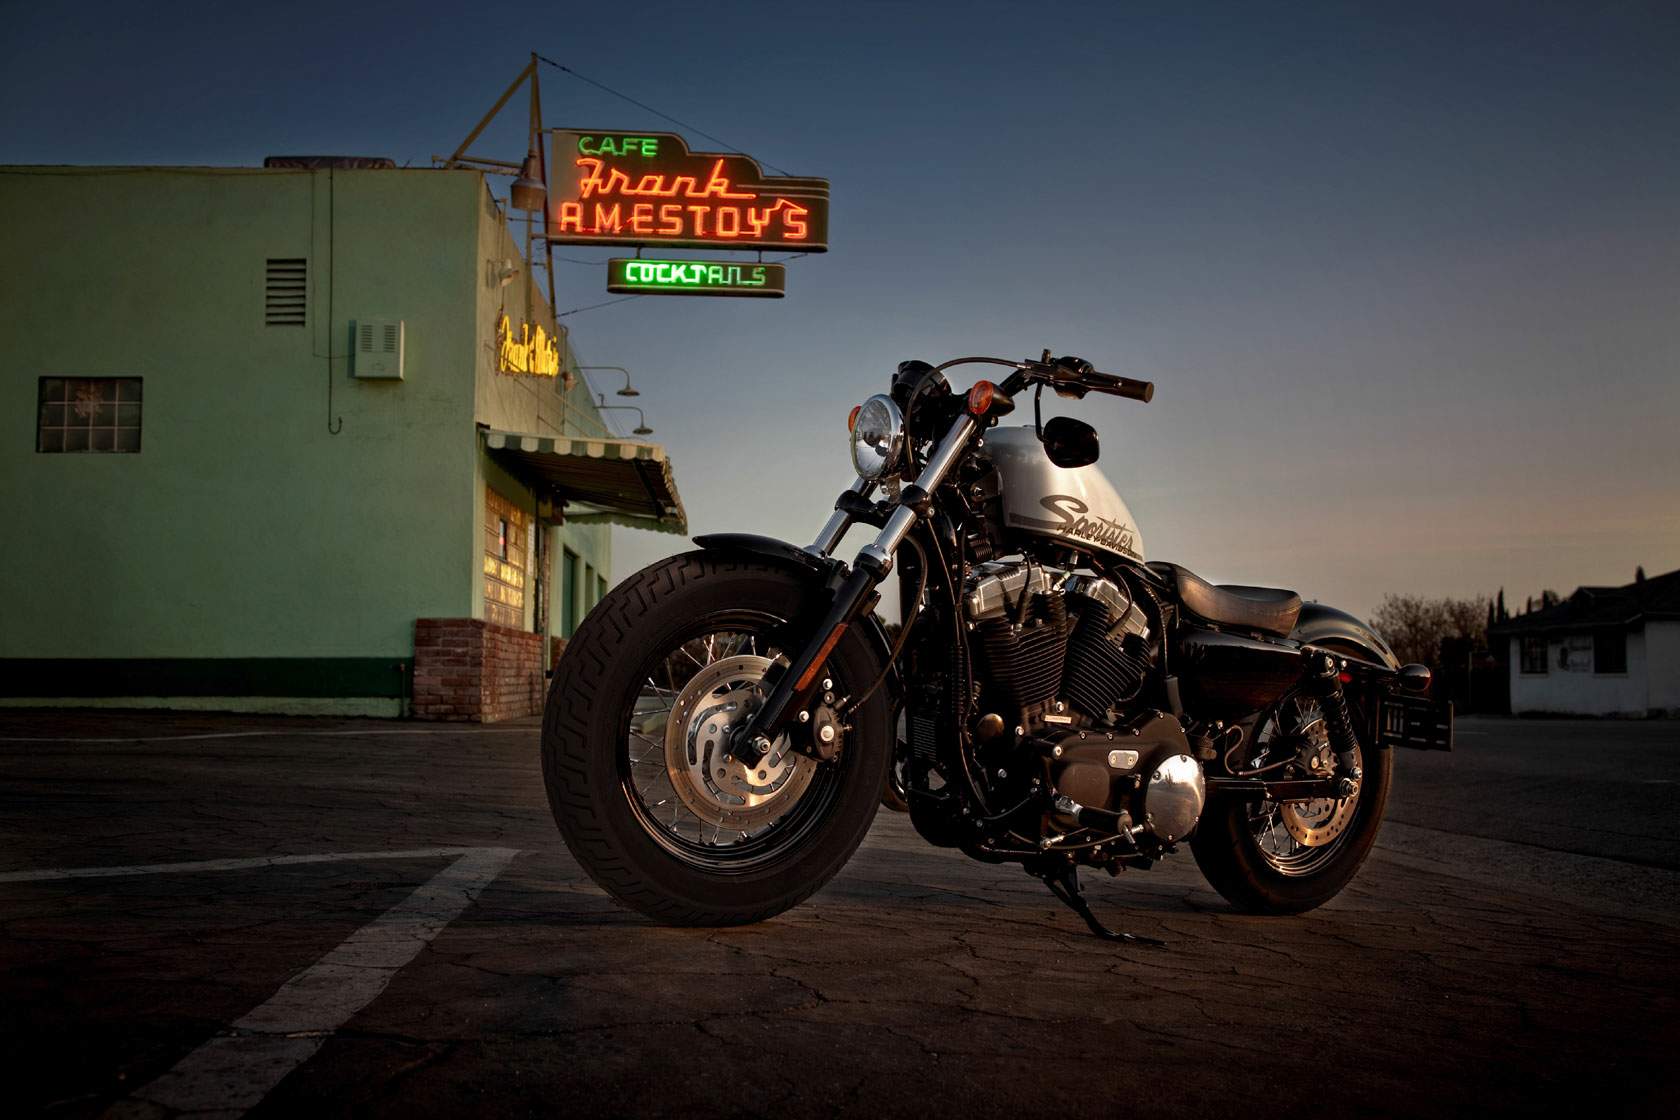 Мотоцикл Harley Davidson XL 1200X Forty-Eight 2011 фото